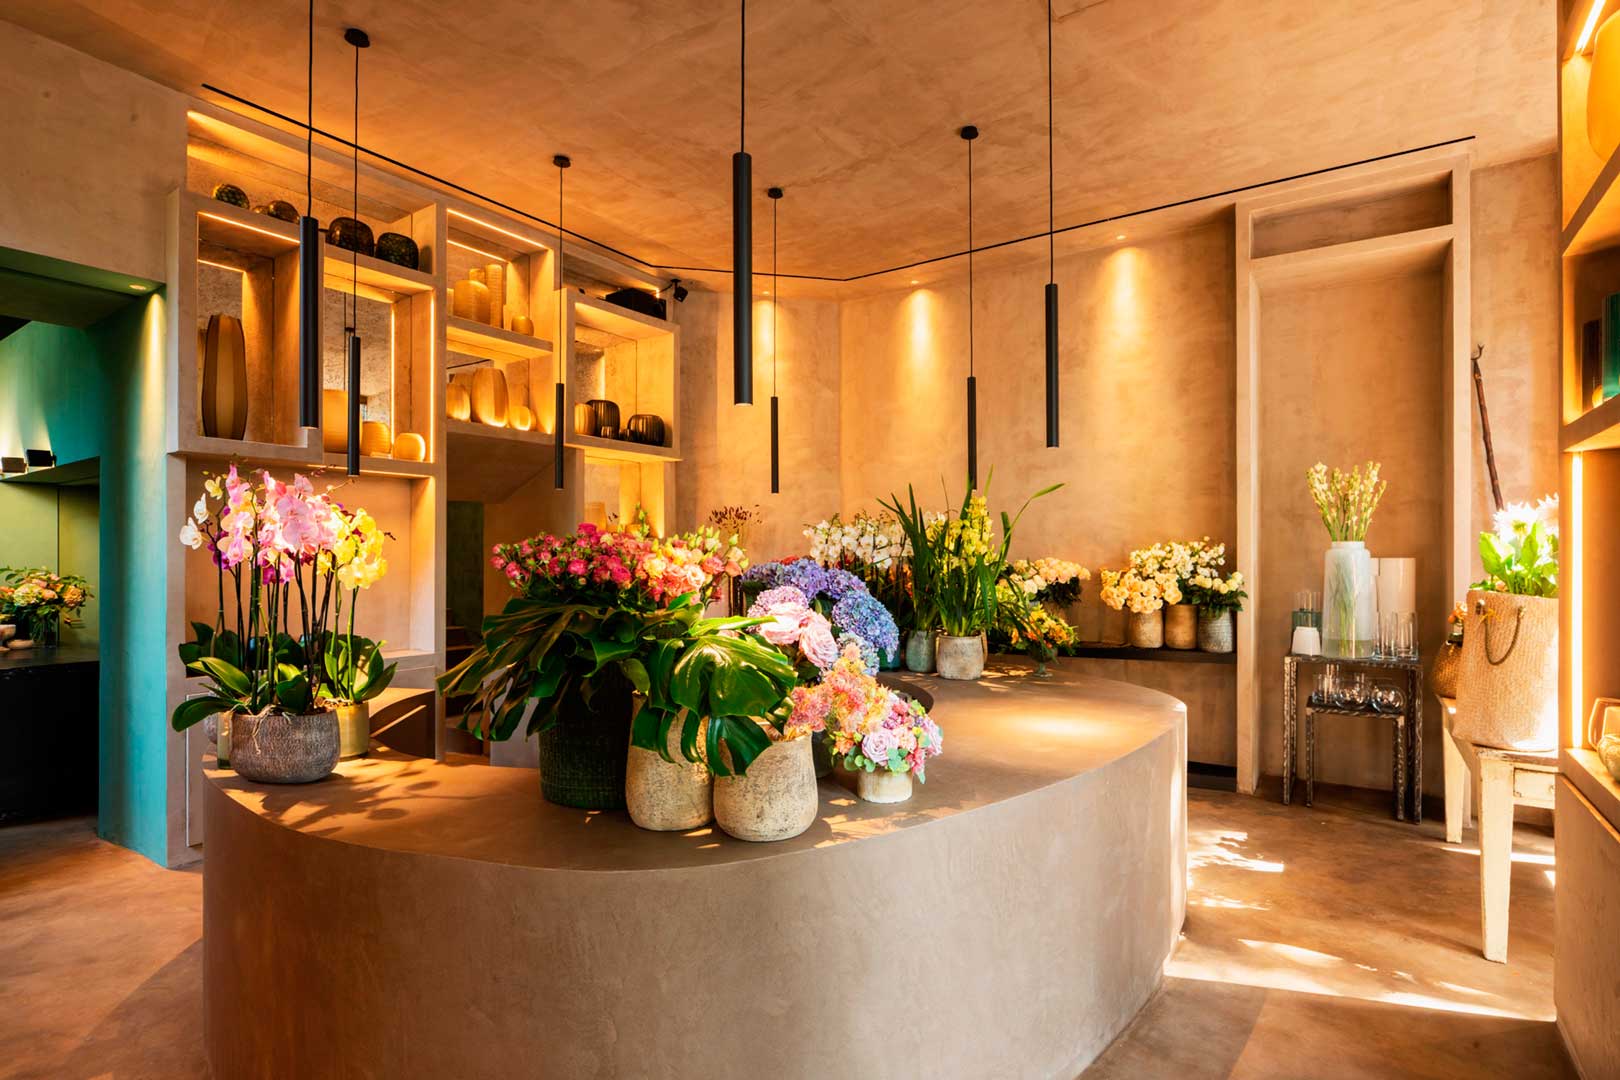 Negozio Di Fiori.The 10 Best Flower Shops In Milan Flawless Milano